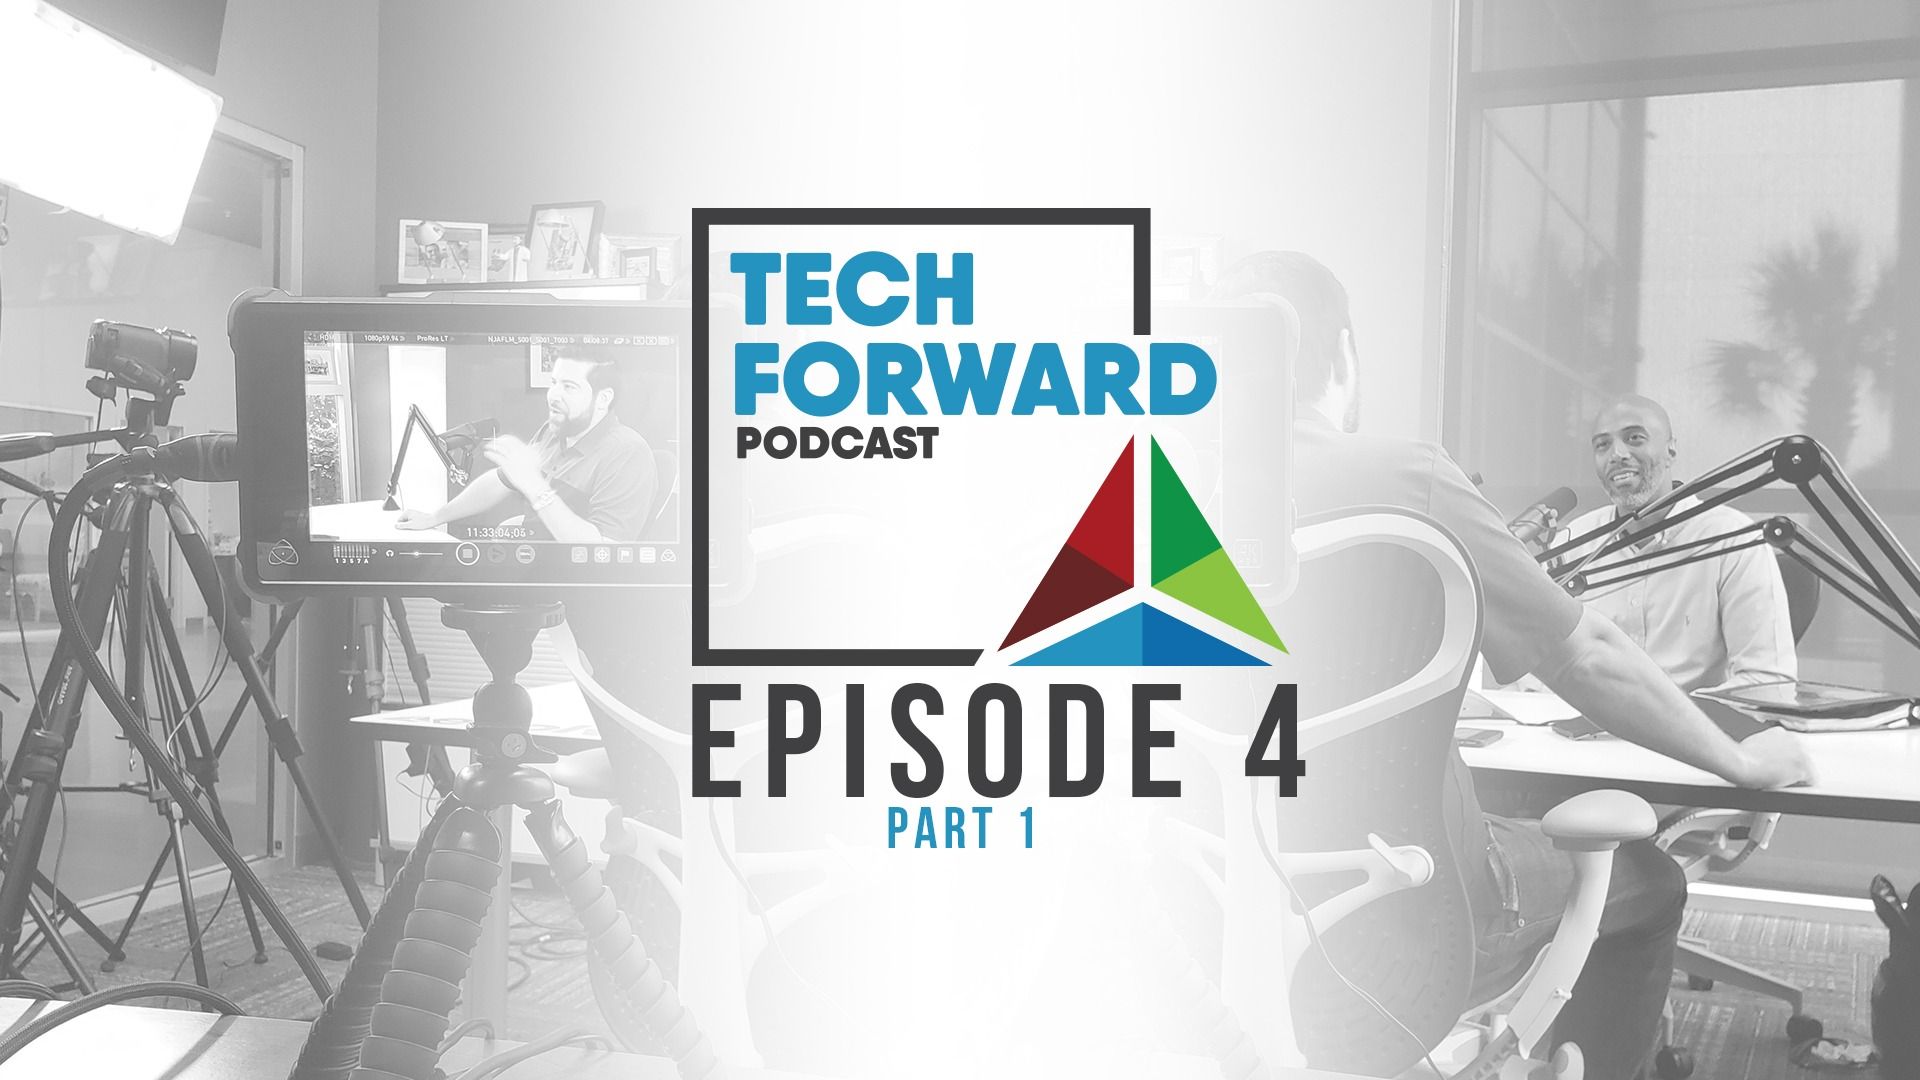 Tech forward podcast episode 4 part 1.